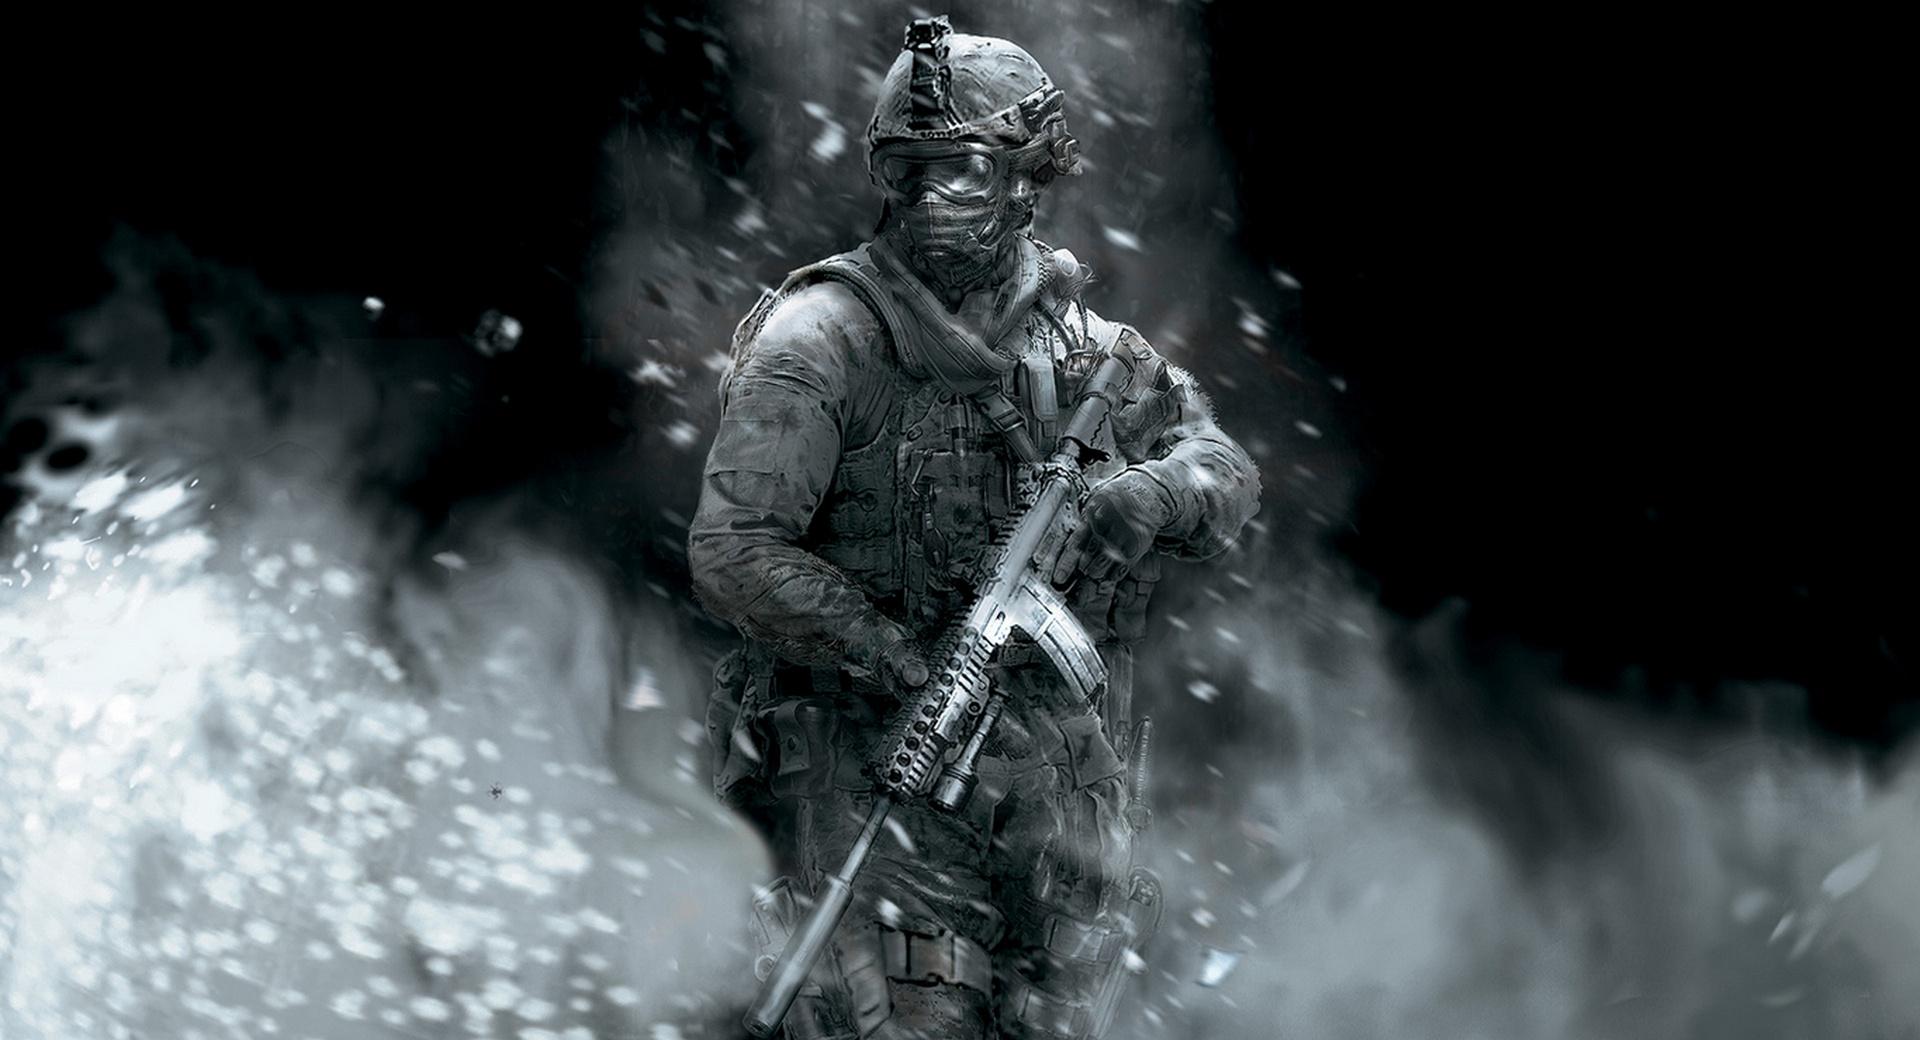 Call Of Duty Modern Warfare 3 at 2048 x 2048 iPad size wallpapers HD quality